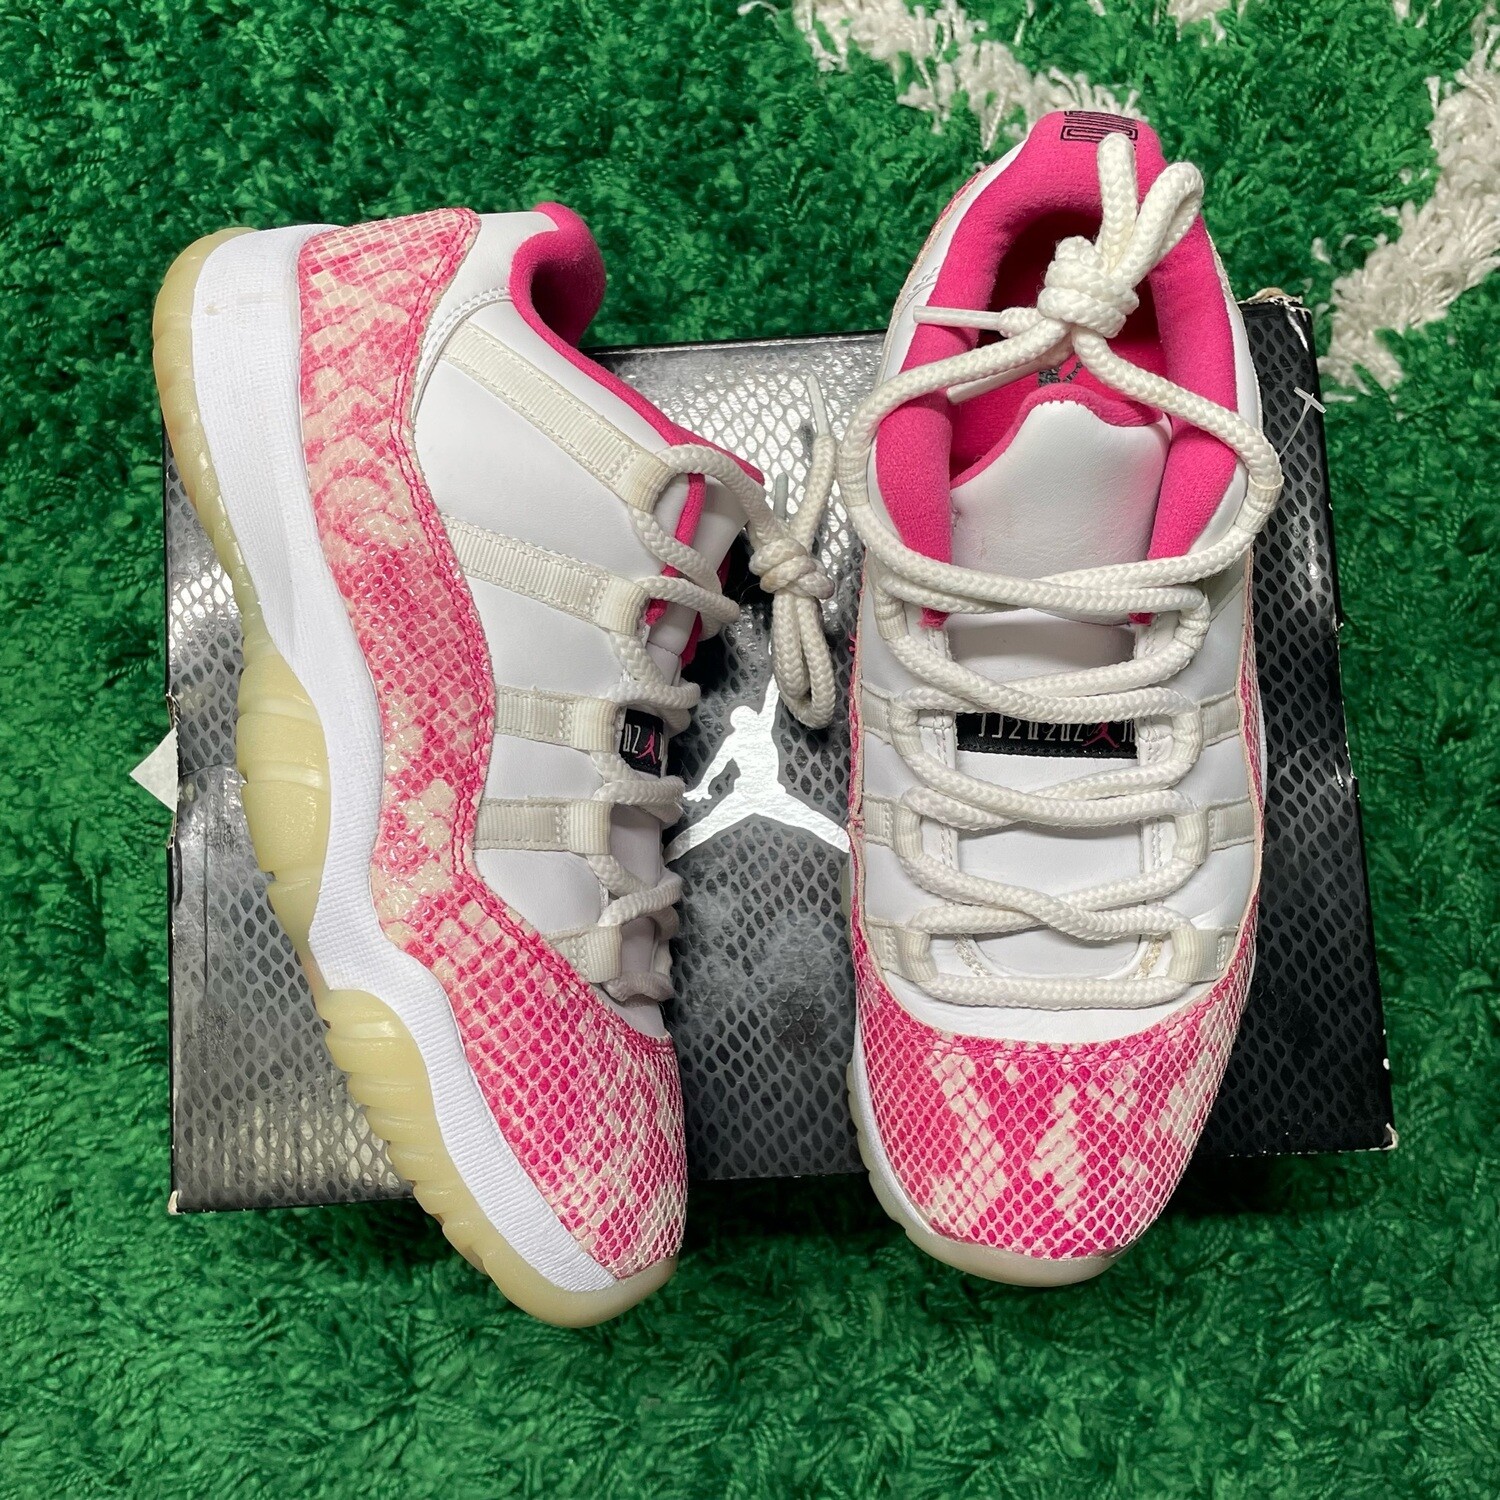 Jordan 11 Retro Low Pink Snakeskin (2019) Size 6.5M/8W